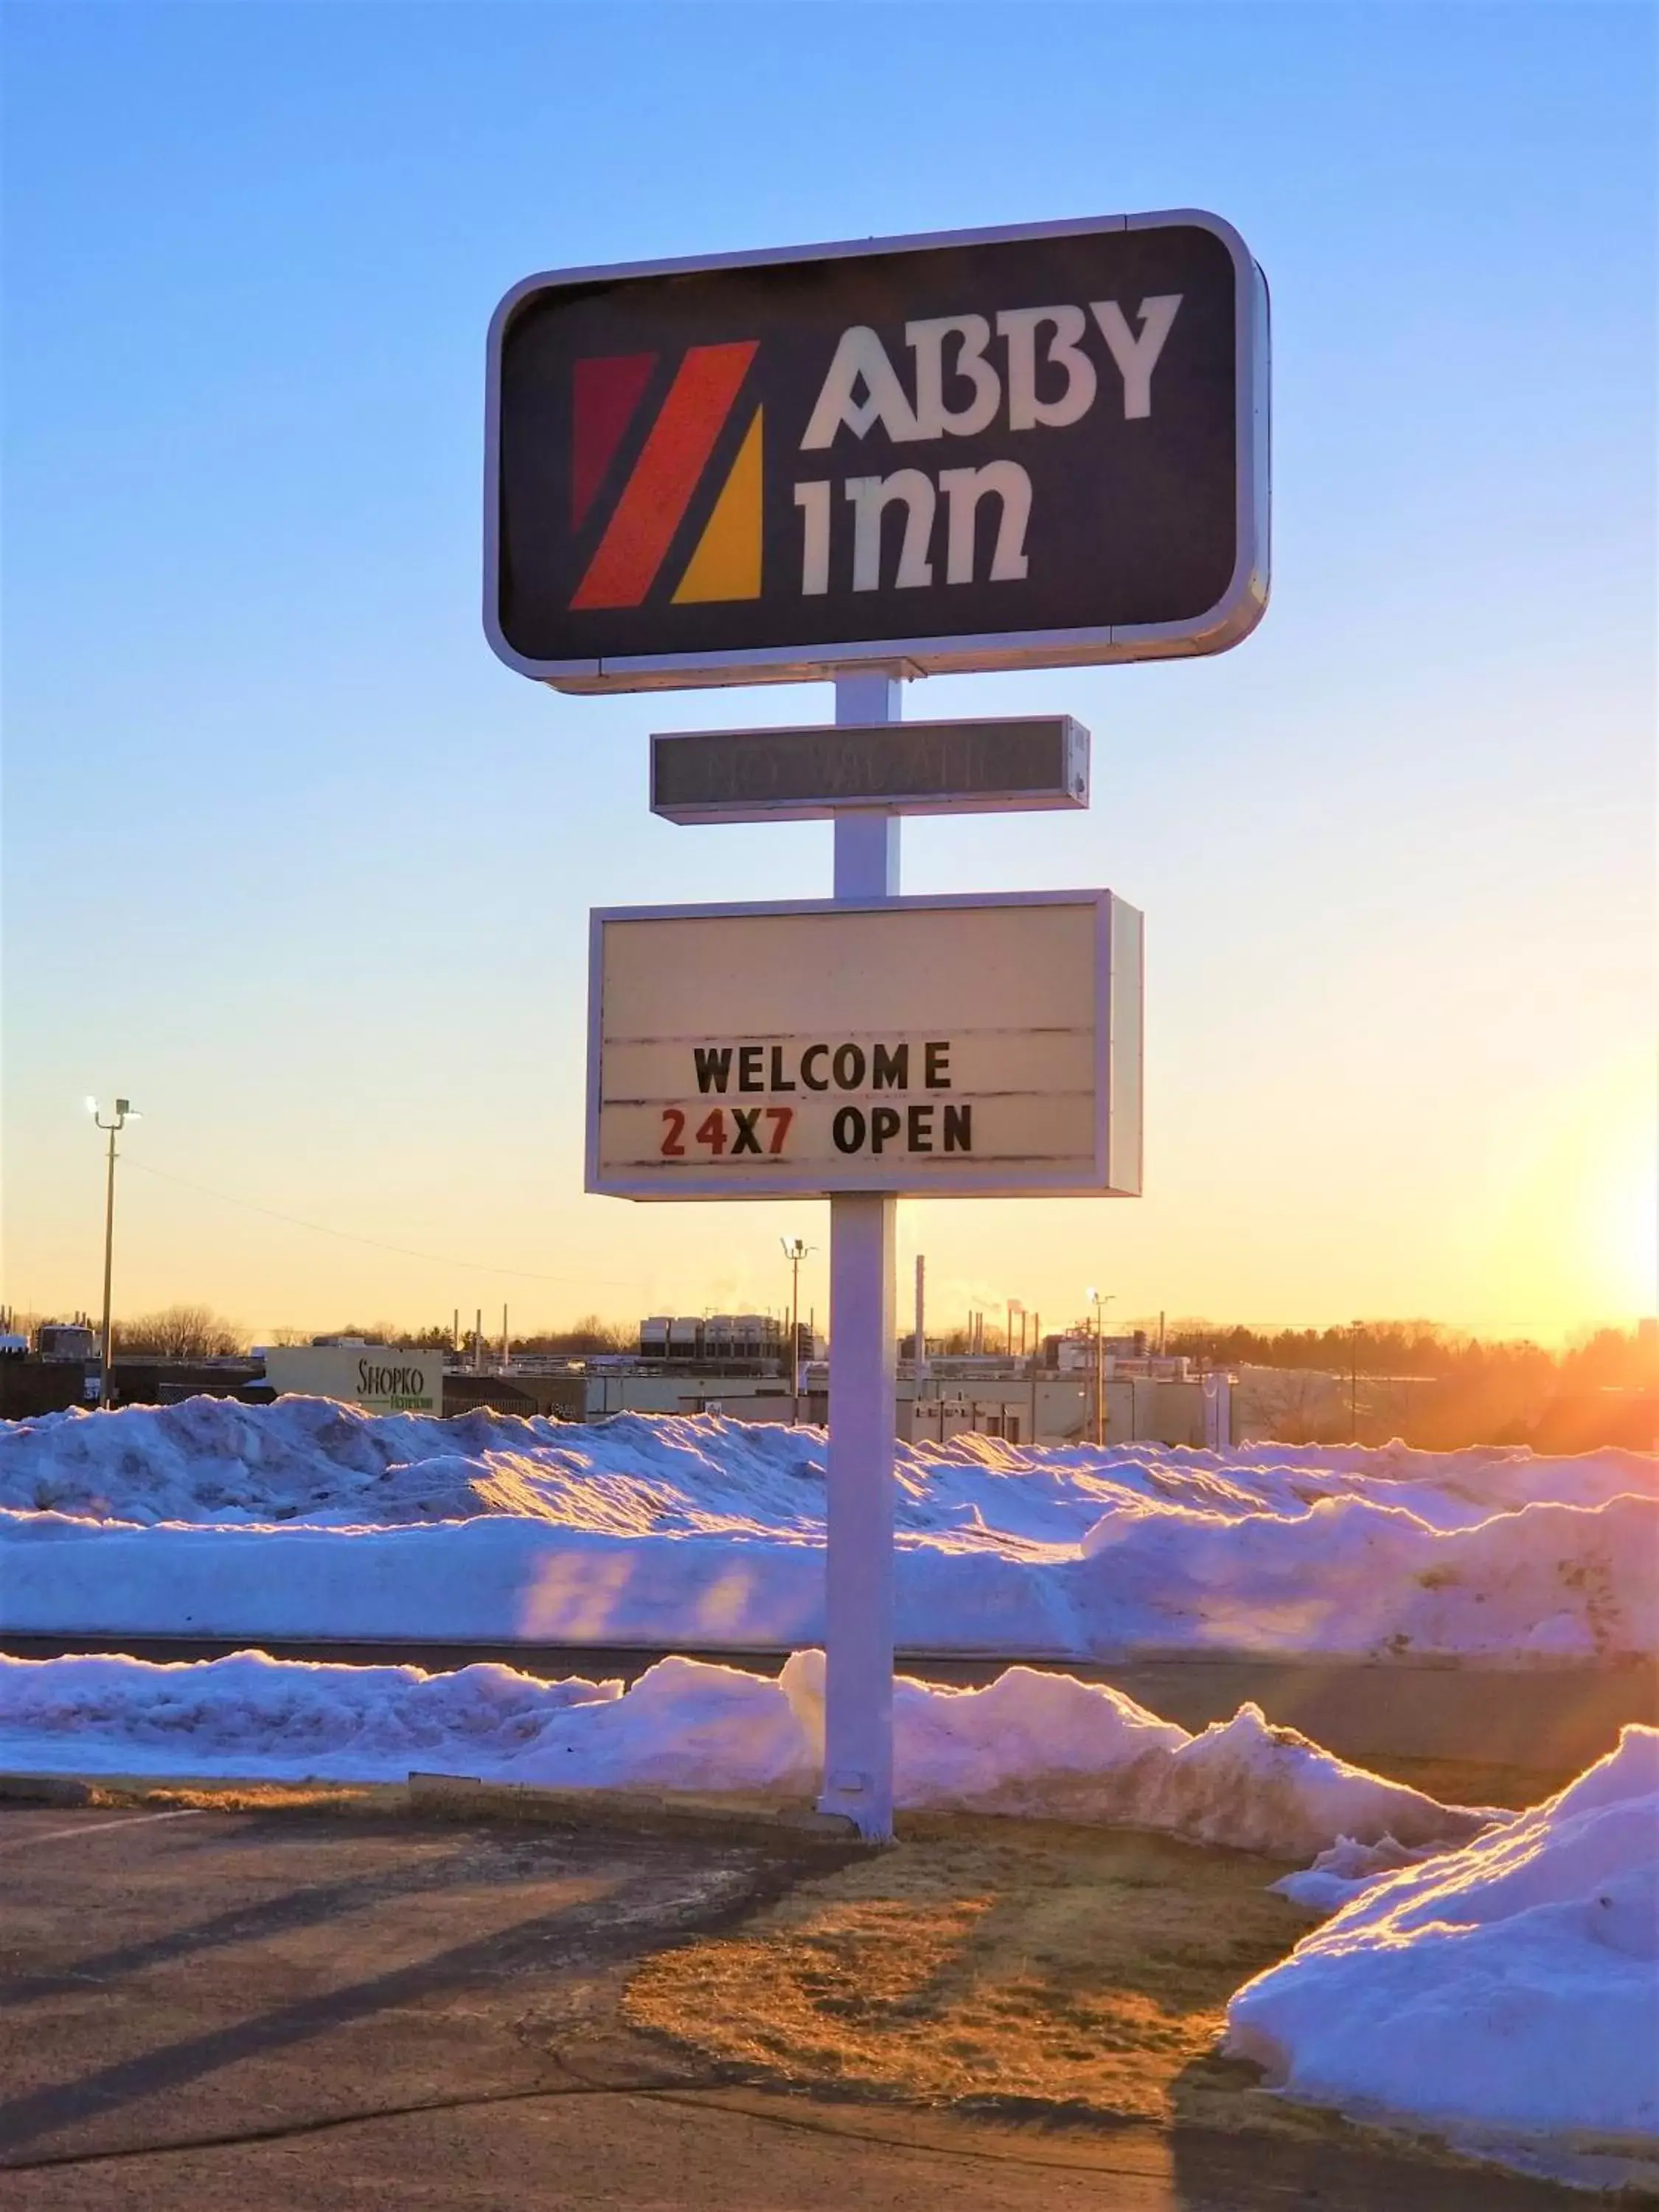 Property logo or sign in Abby Inn